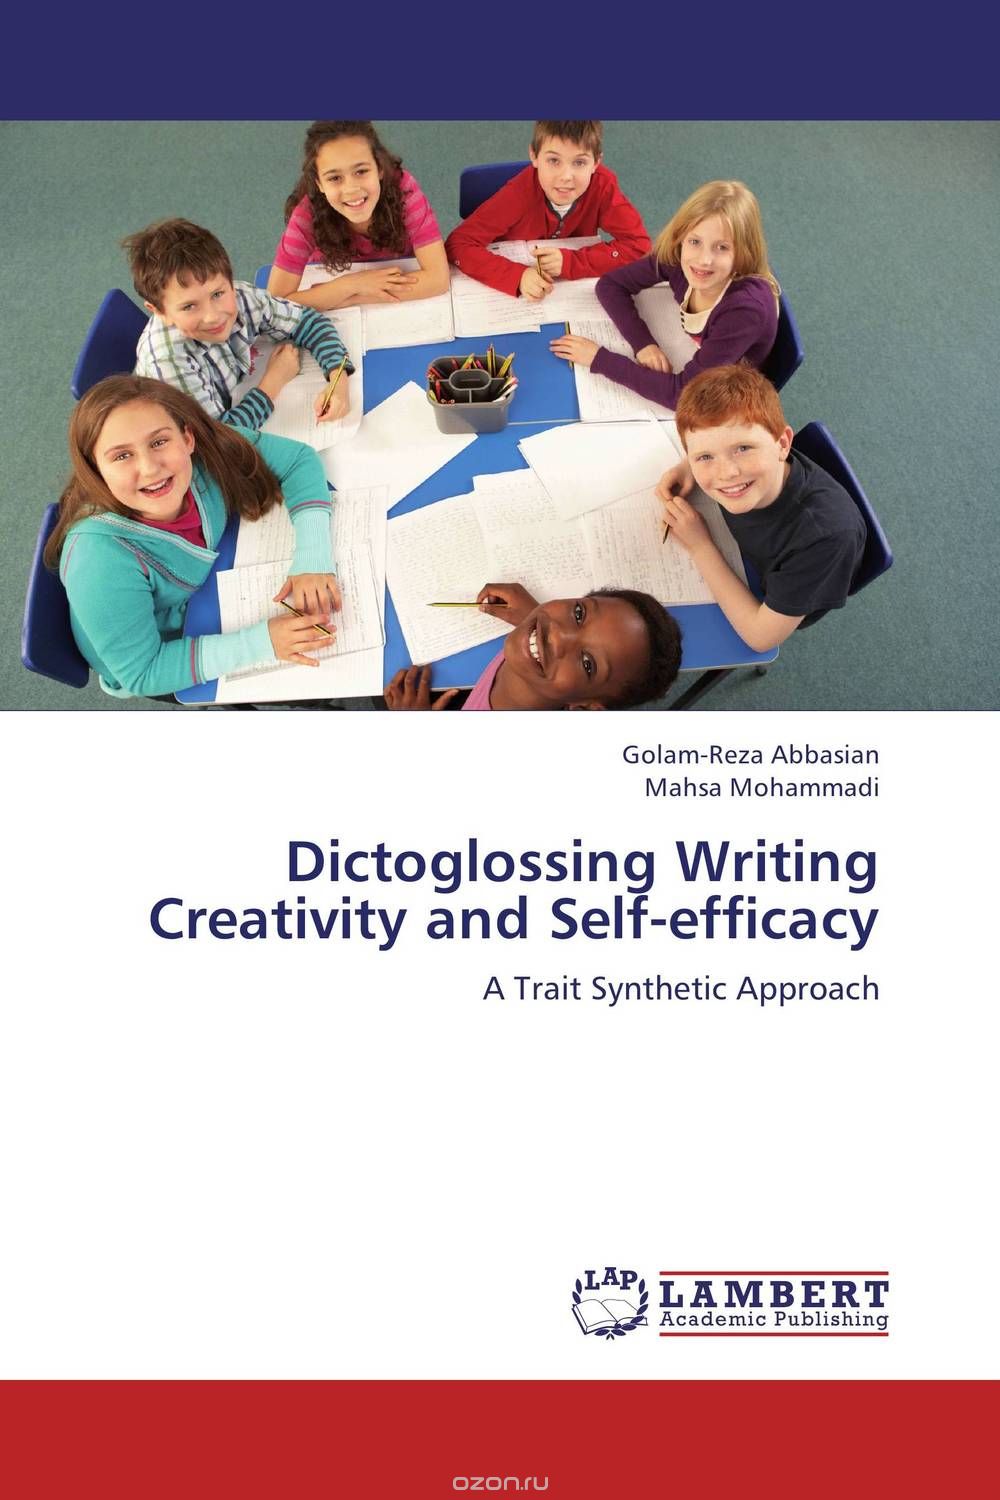 Скачать книгу "Dictoglossing Writing Creativity and Self-efficacy"